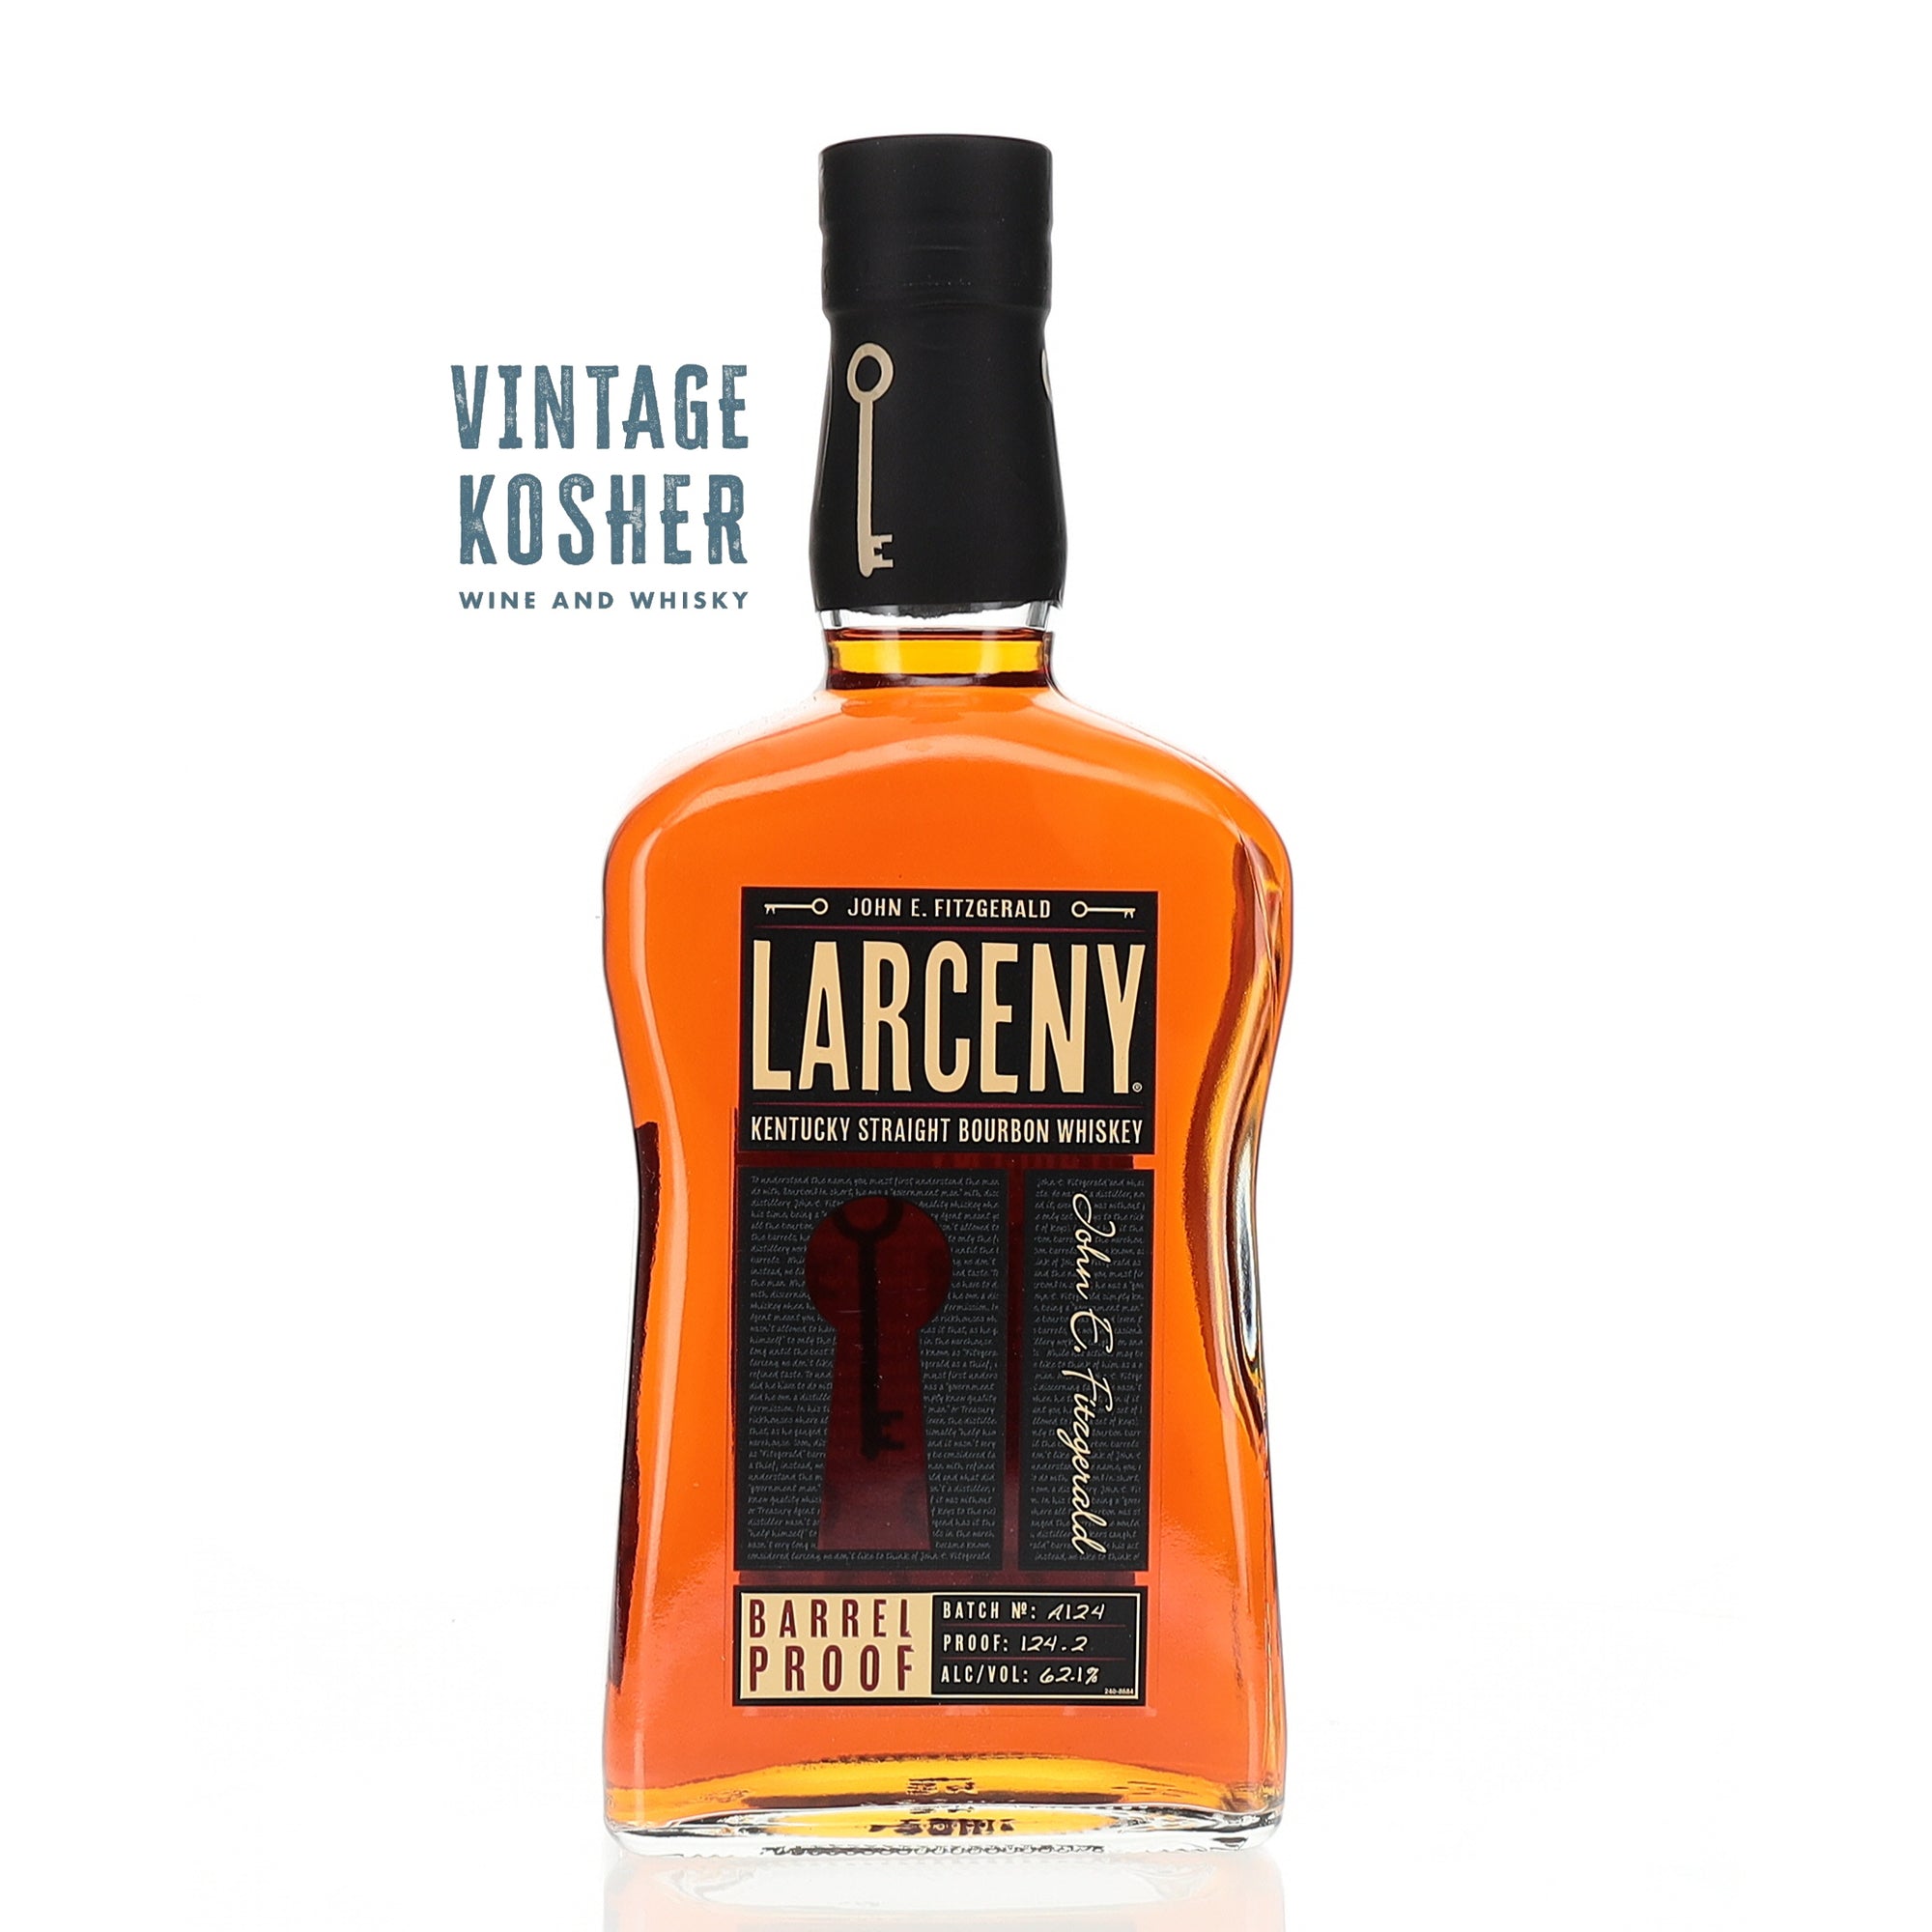 Larceny Small Batch Straight Bourbon Barrel Proof 124.2